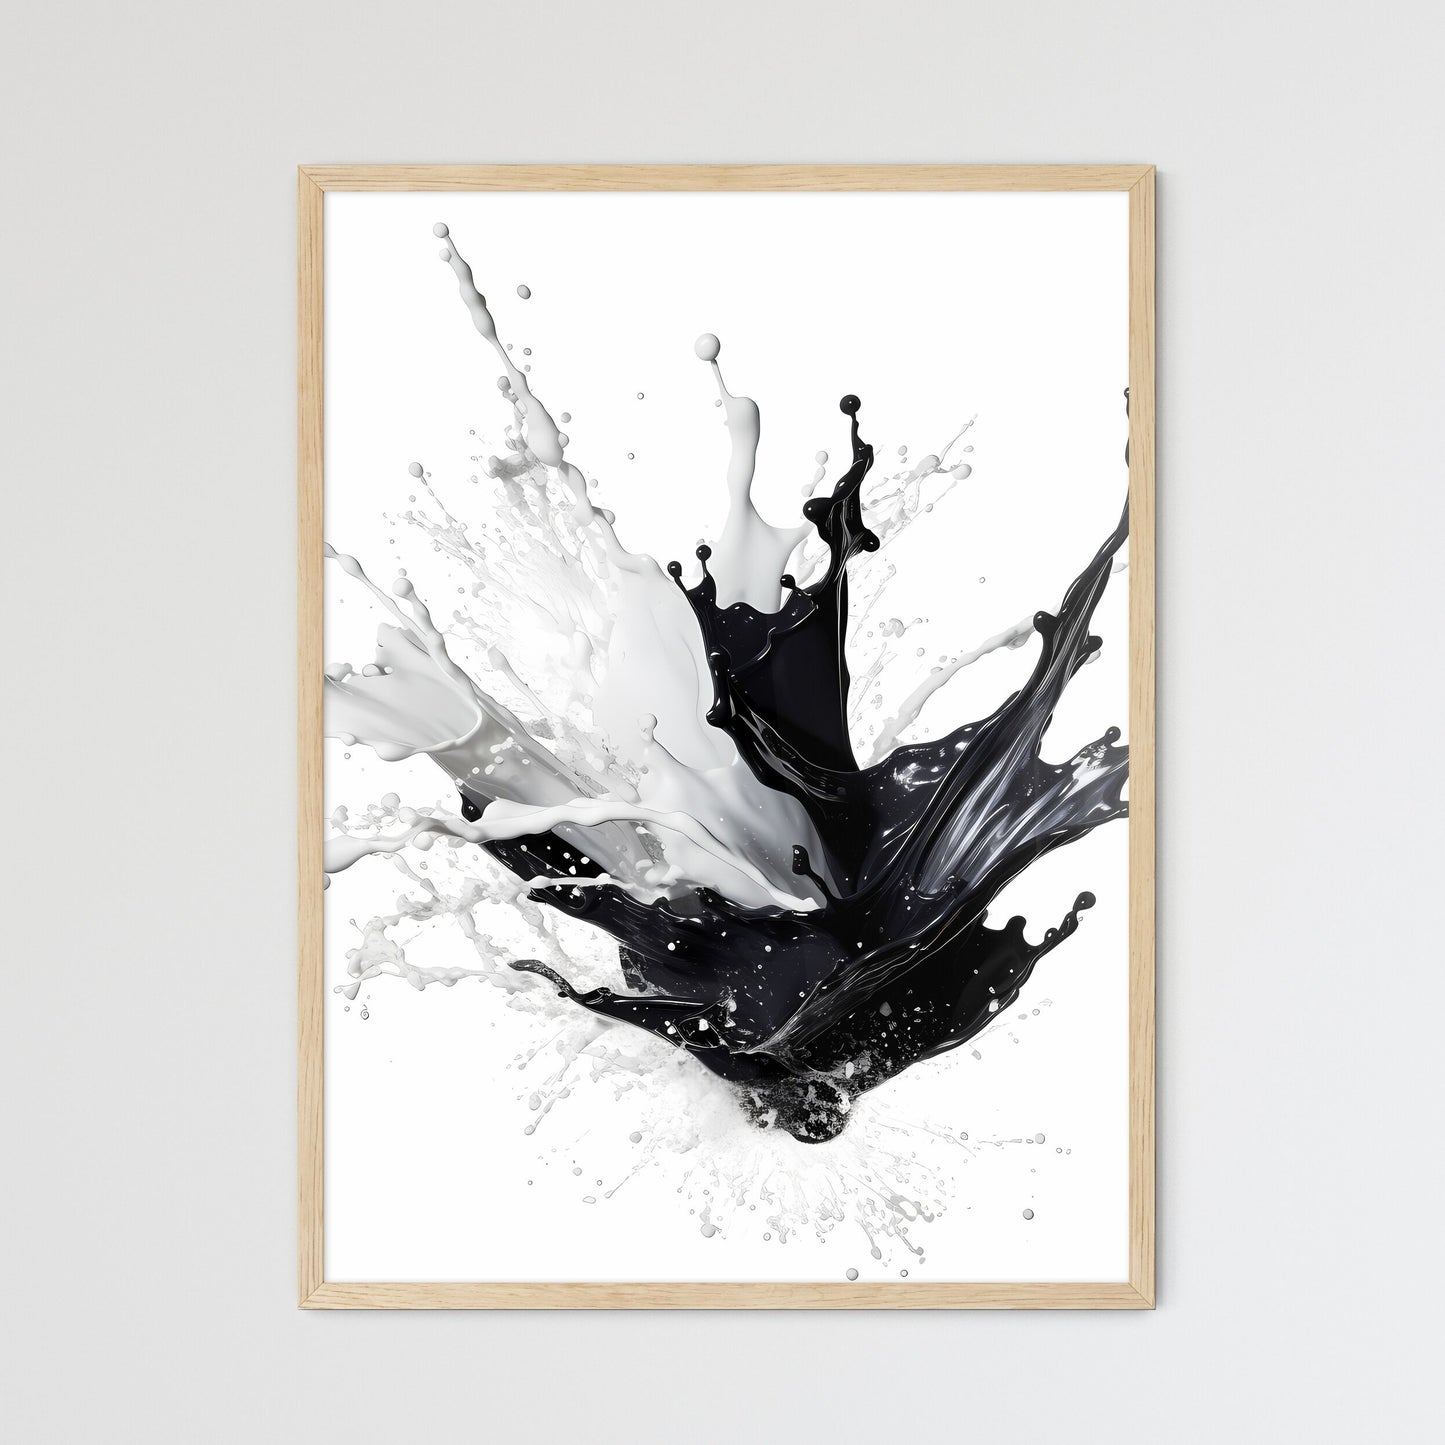 A Black And White Liquid Splashing Art Print Default Title